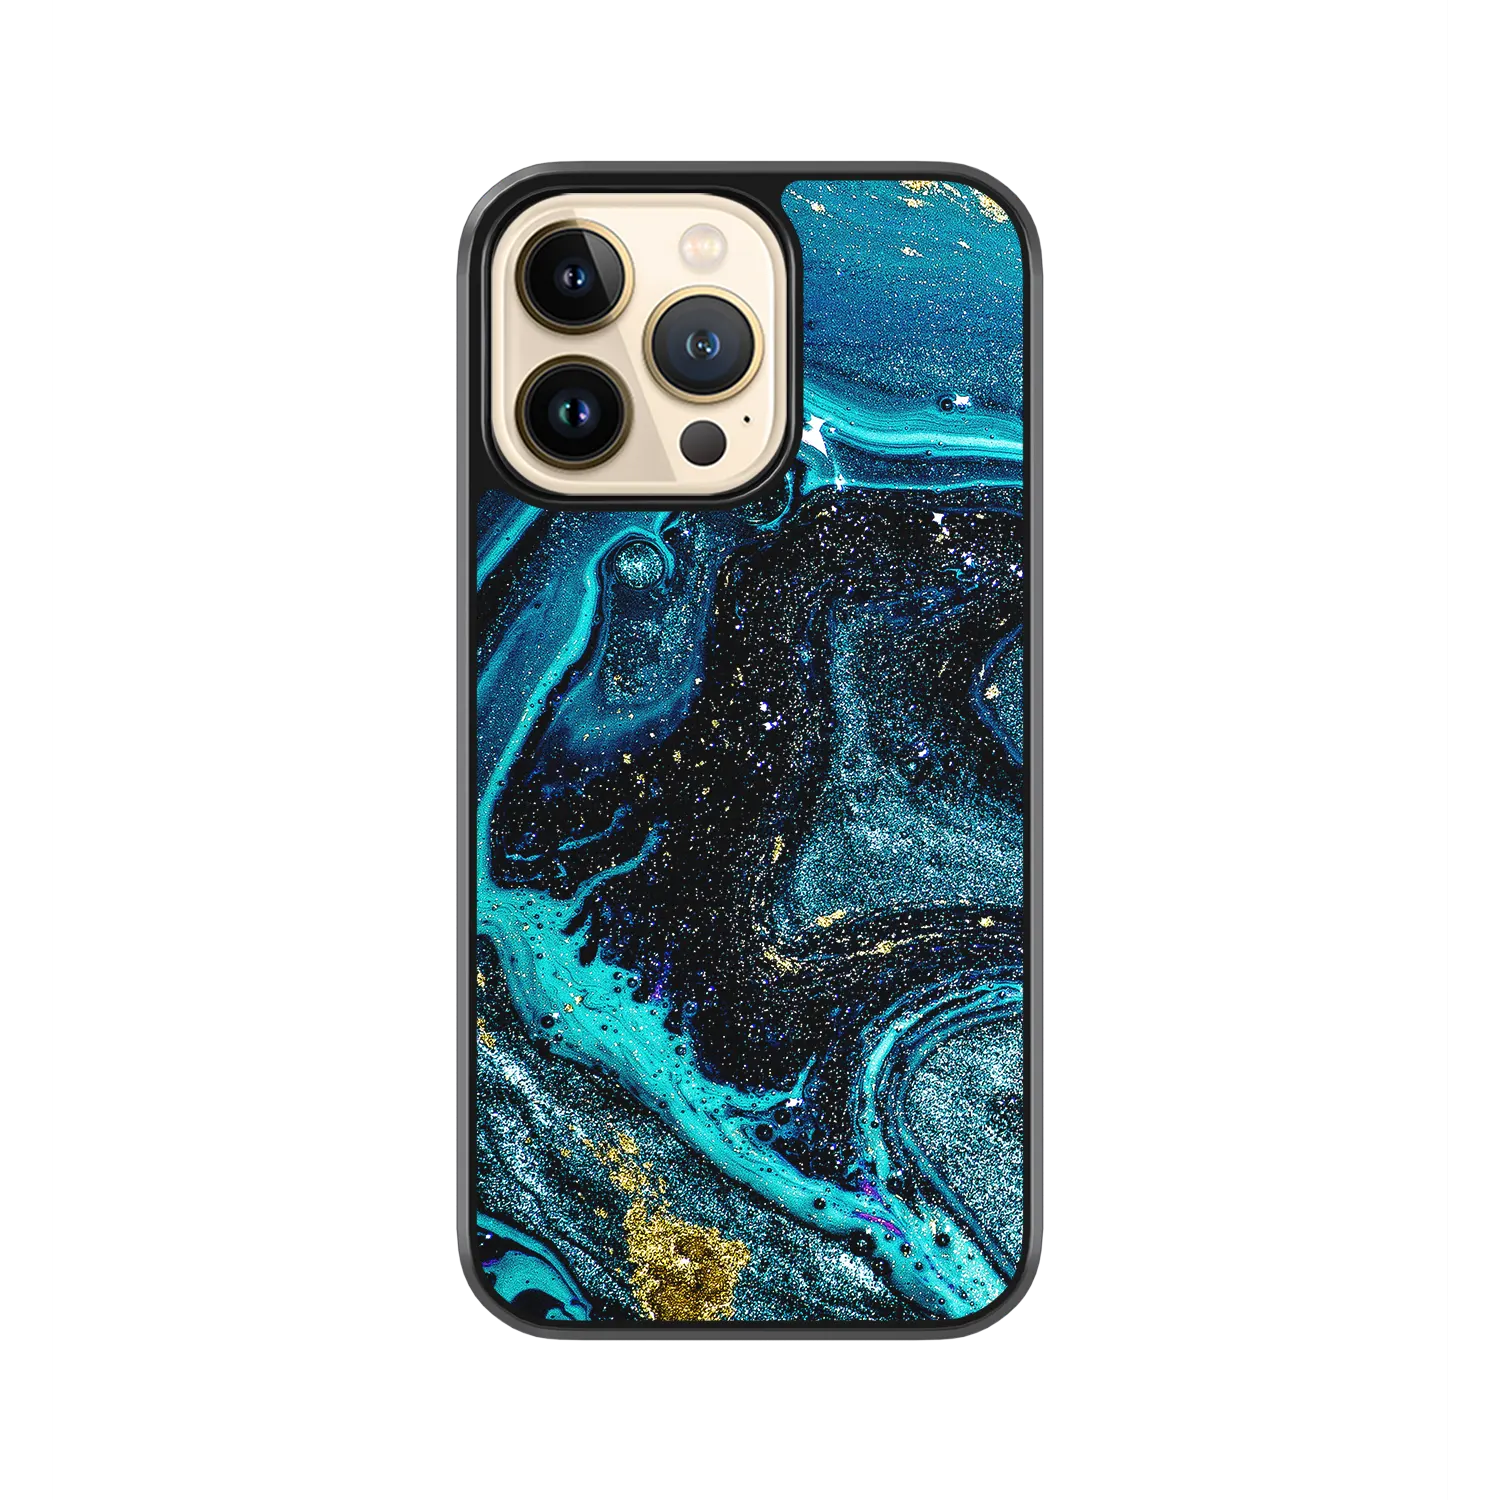 Poseidon iphone 13 pro max cover